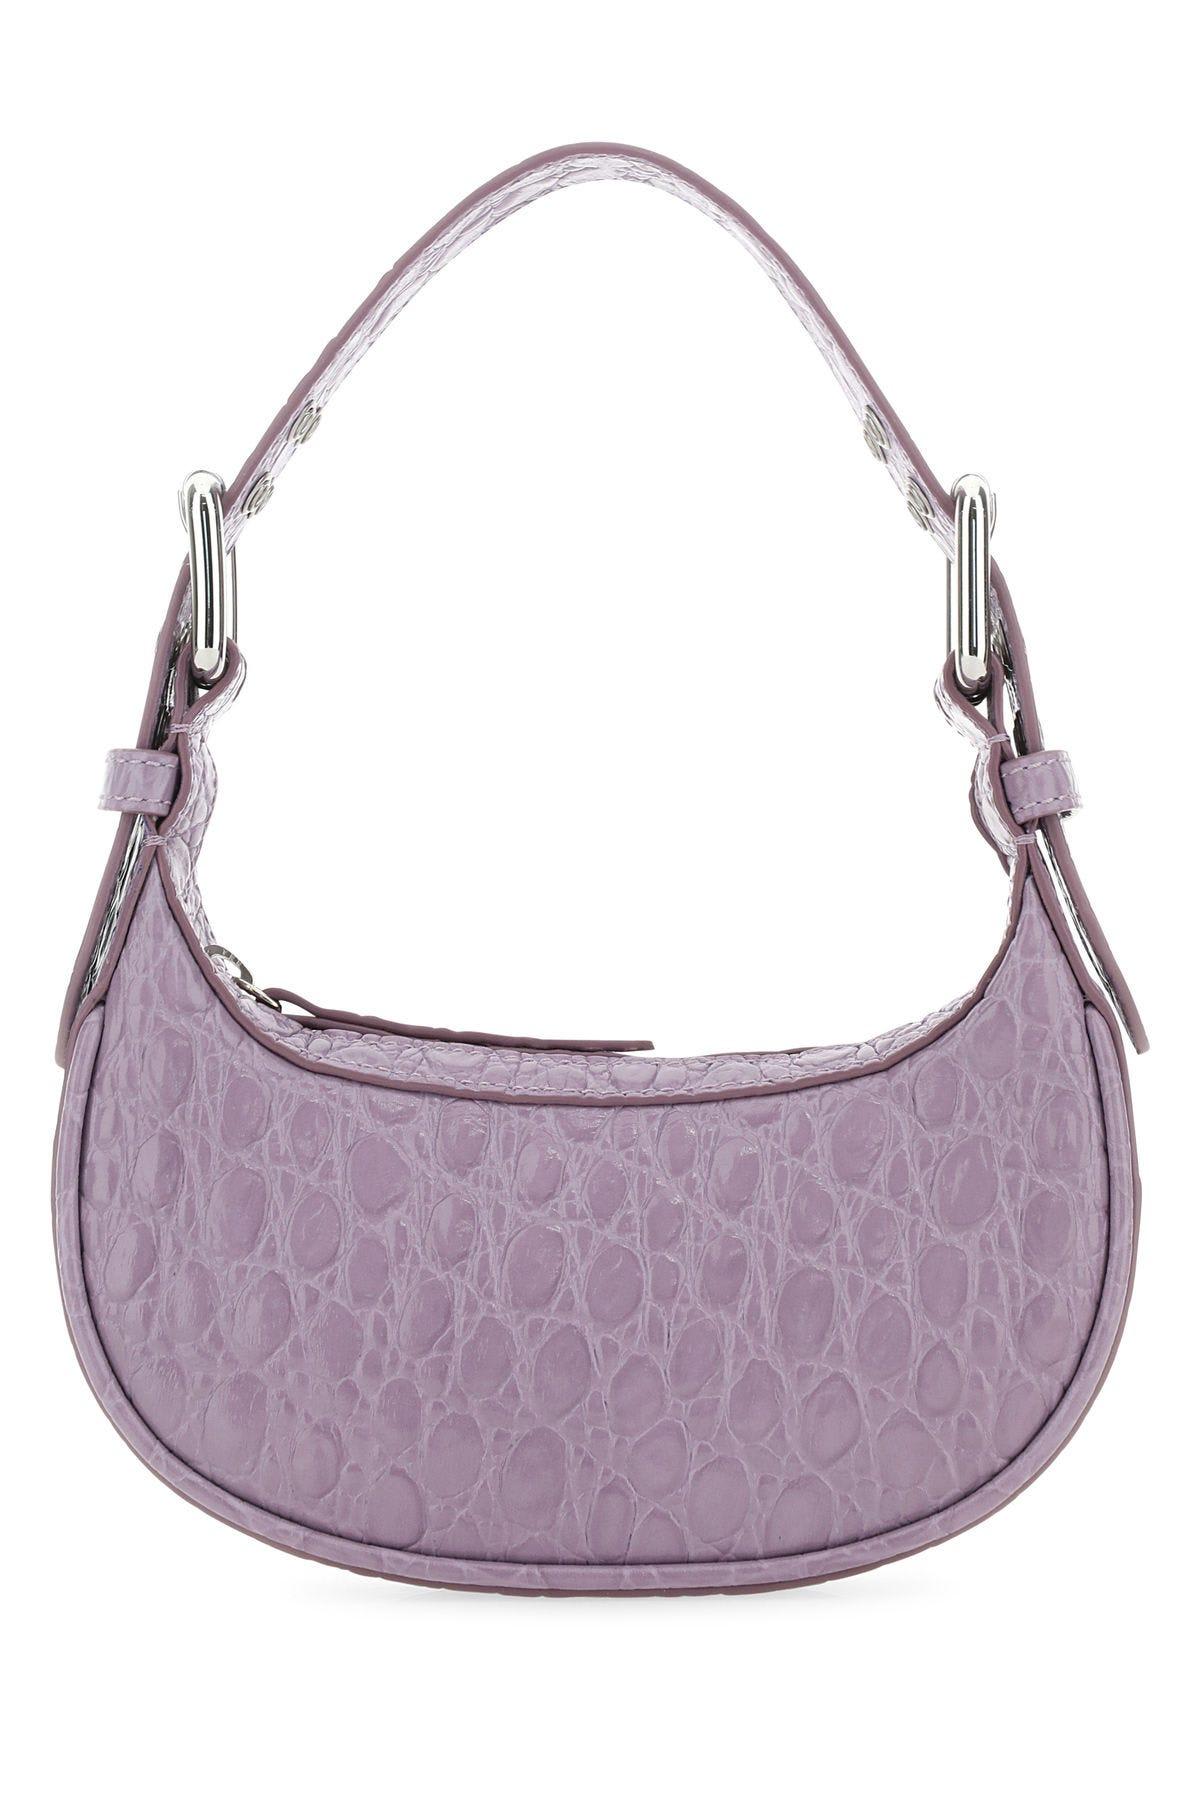 BY FAR Lilac Leather Mini Soho Handbag